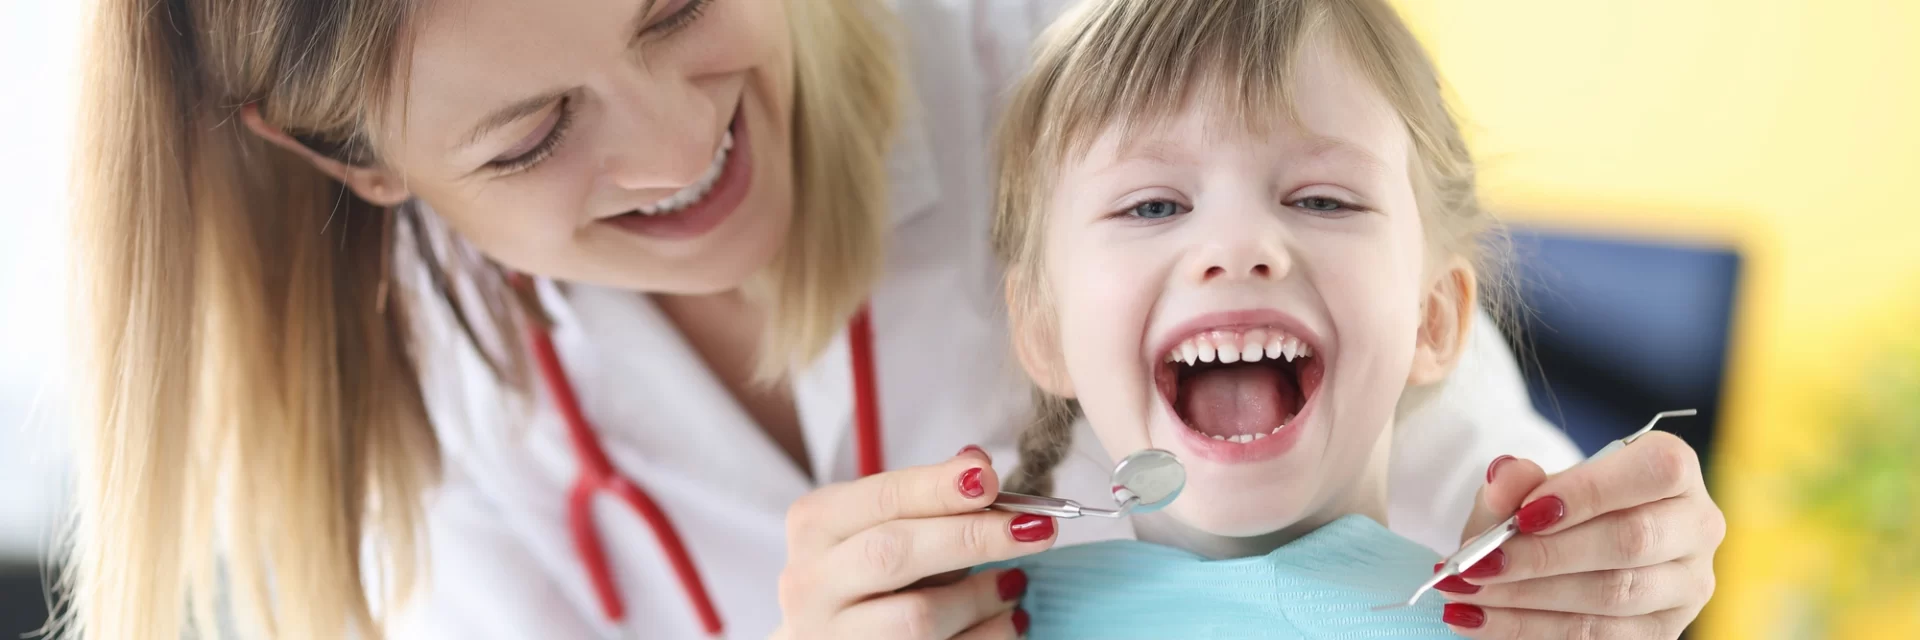 Children's Dentist McKinney TX | Pediatric Dentistry